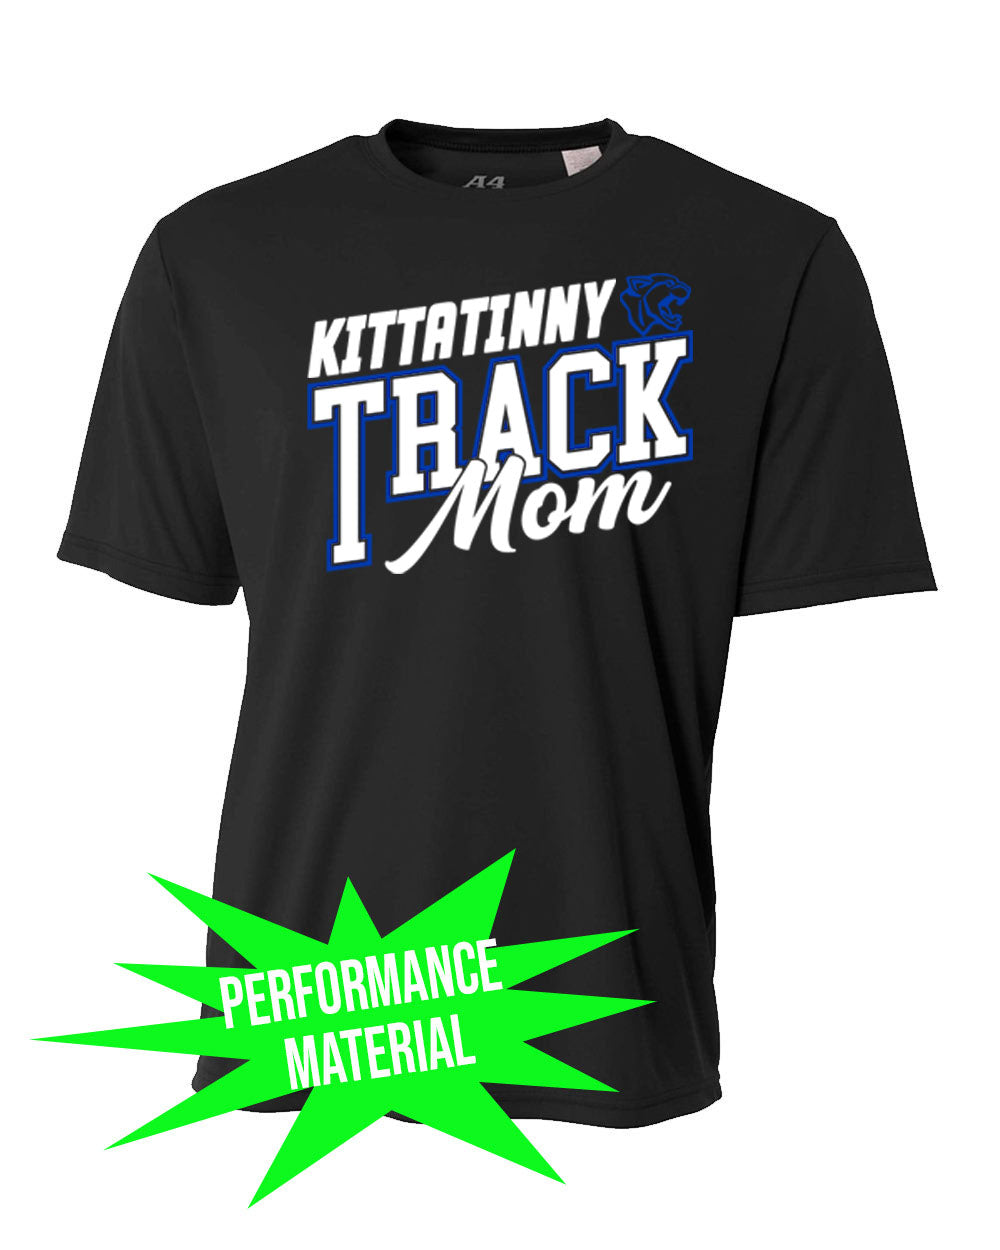 Kittatinny Track Performance Material design 4 T-Shirt